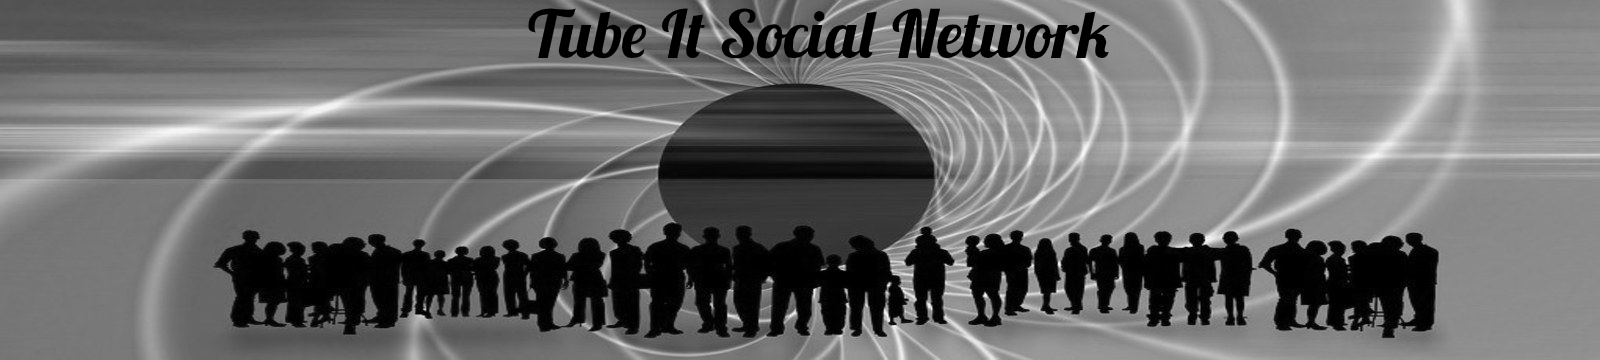 Tube-It Social Network